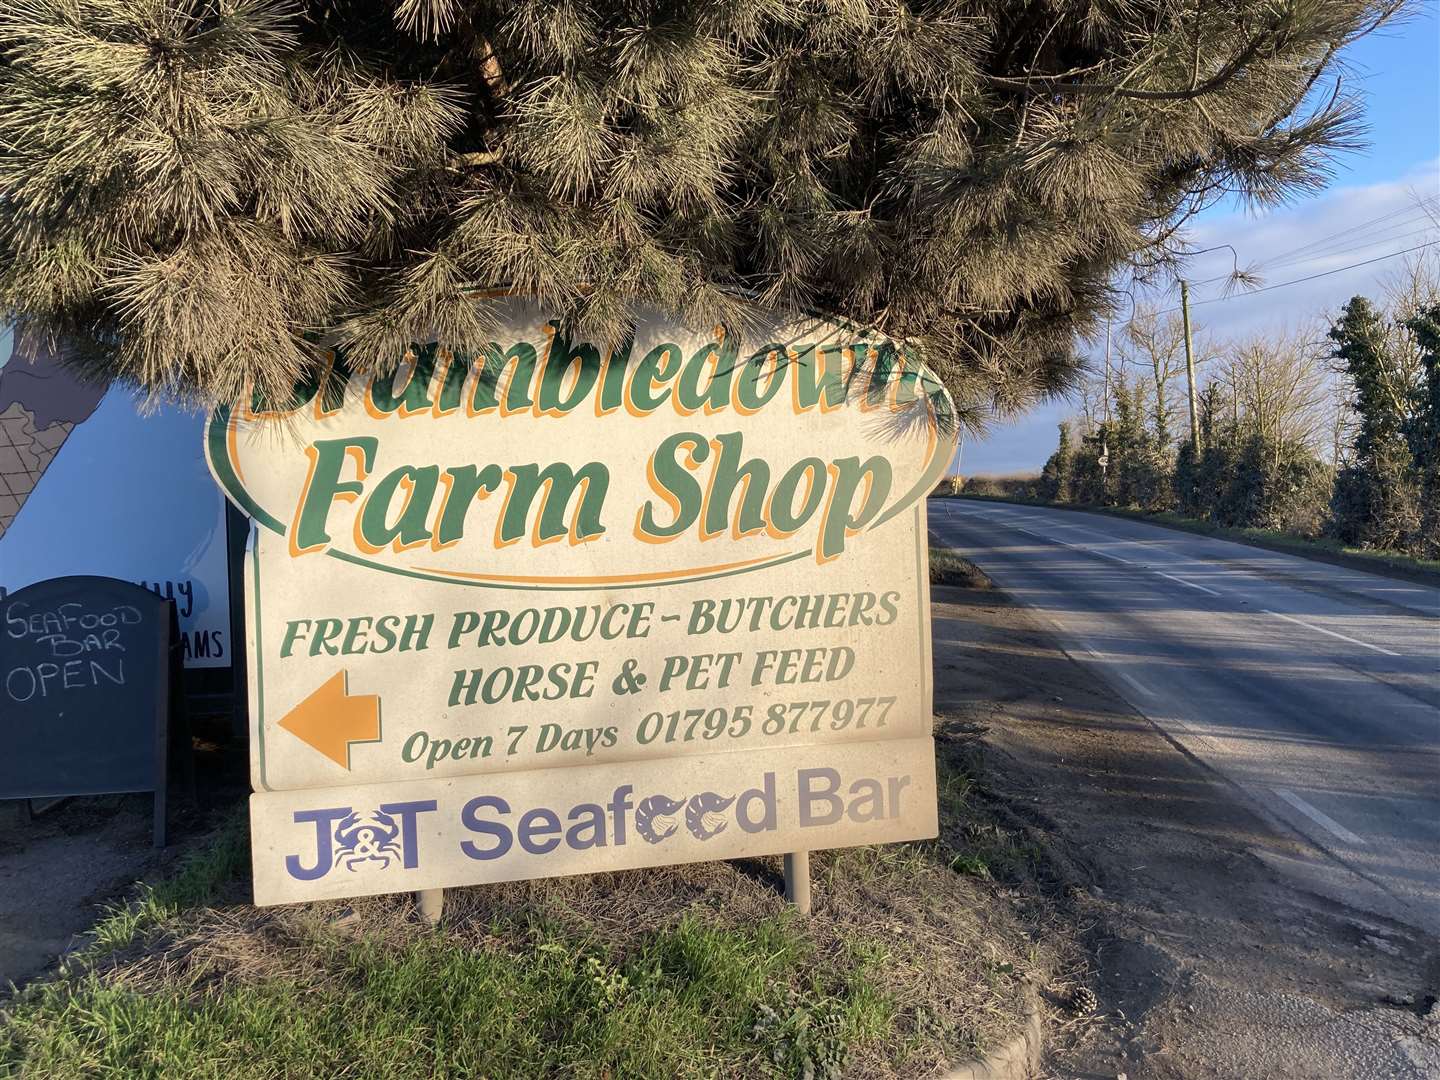 Brambledown Farm Shop on the Isle of Sheppey